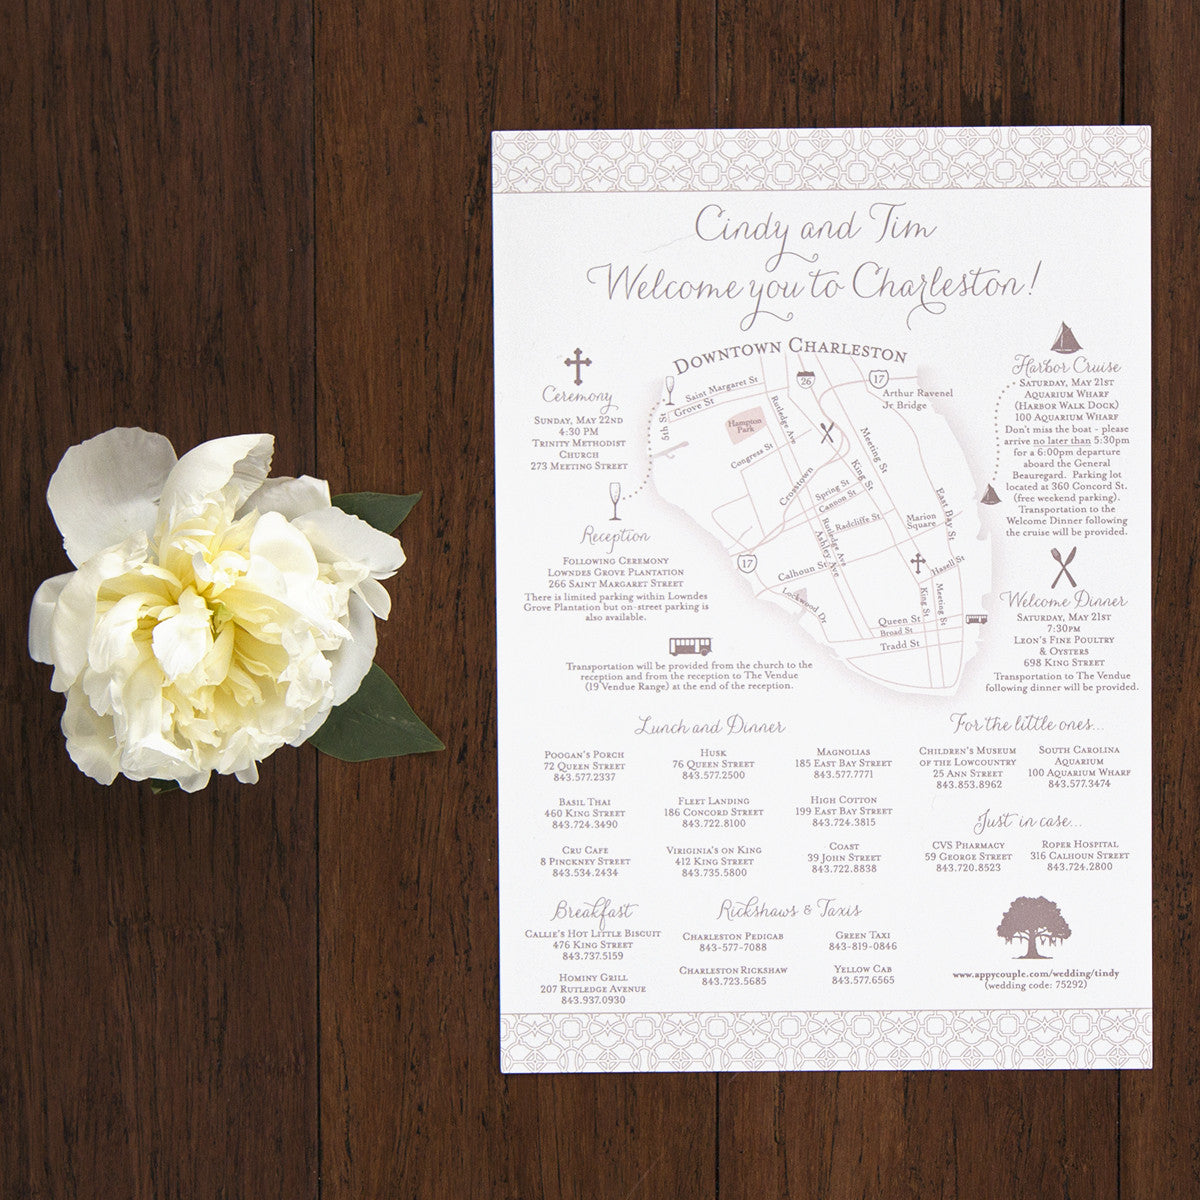 Charleston Wedding Weekend Itinerary by Scotti Cline Designs